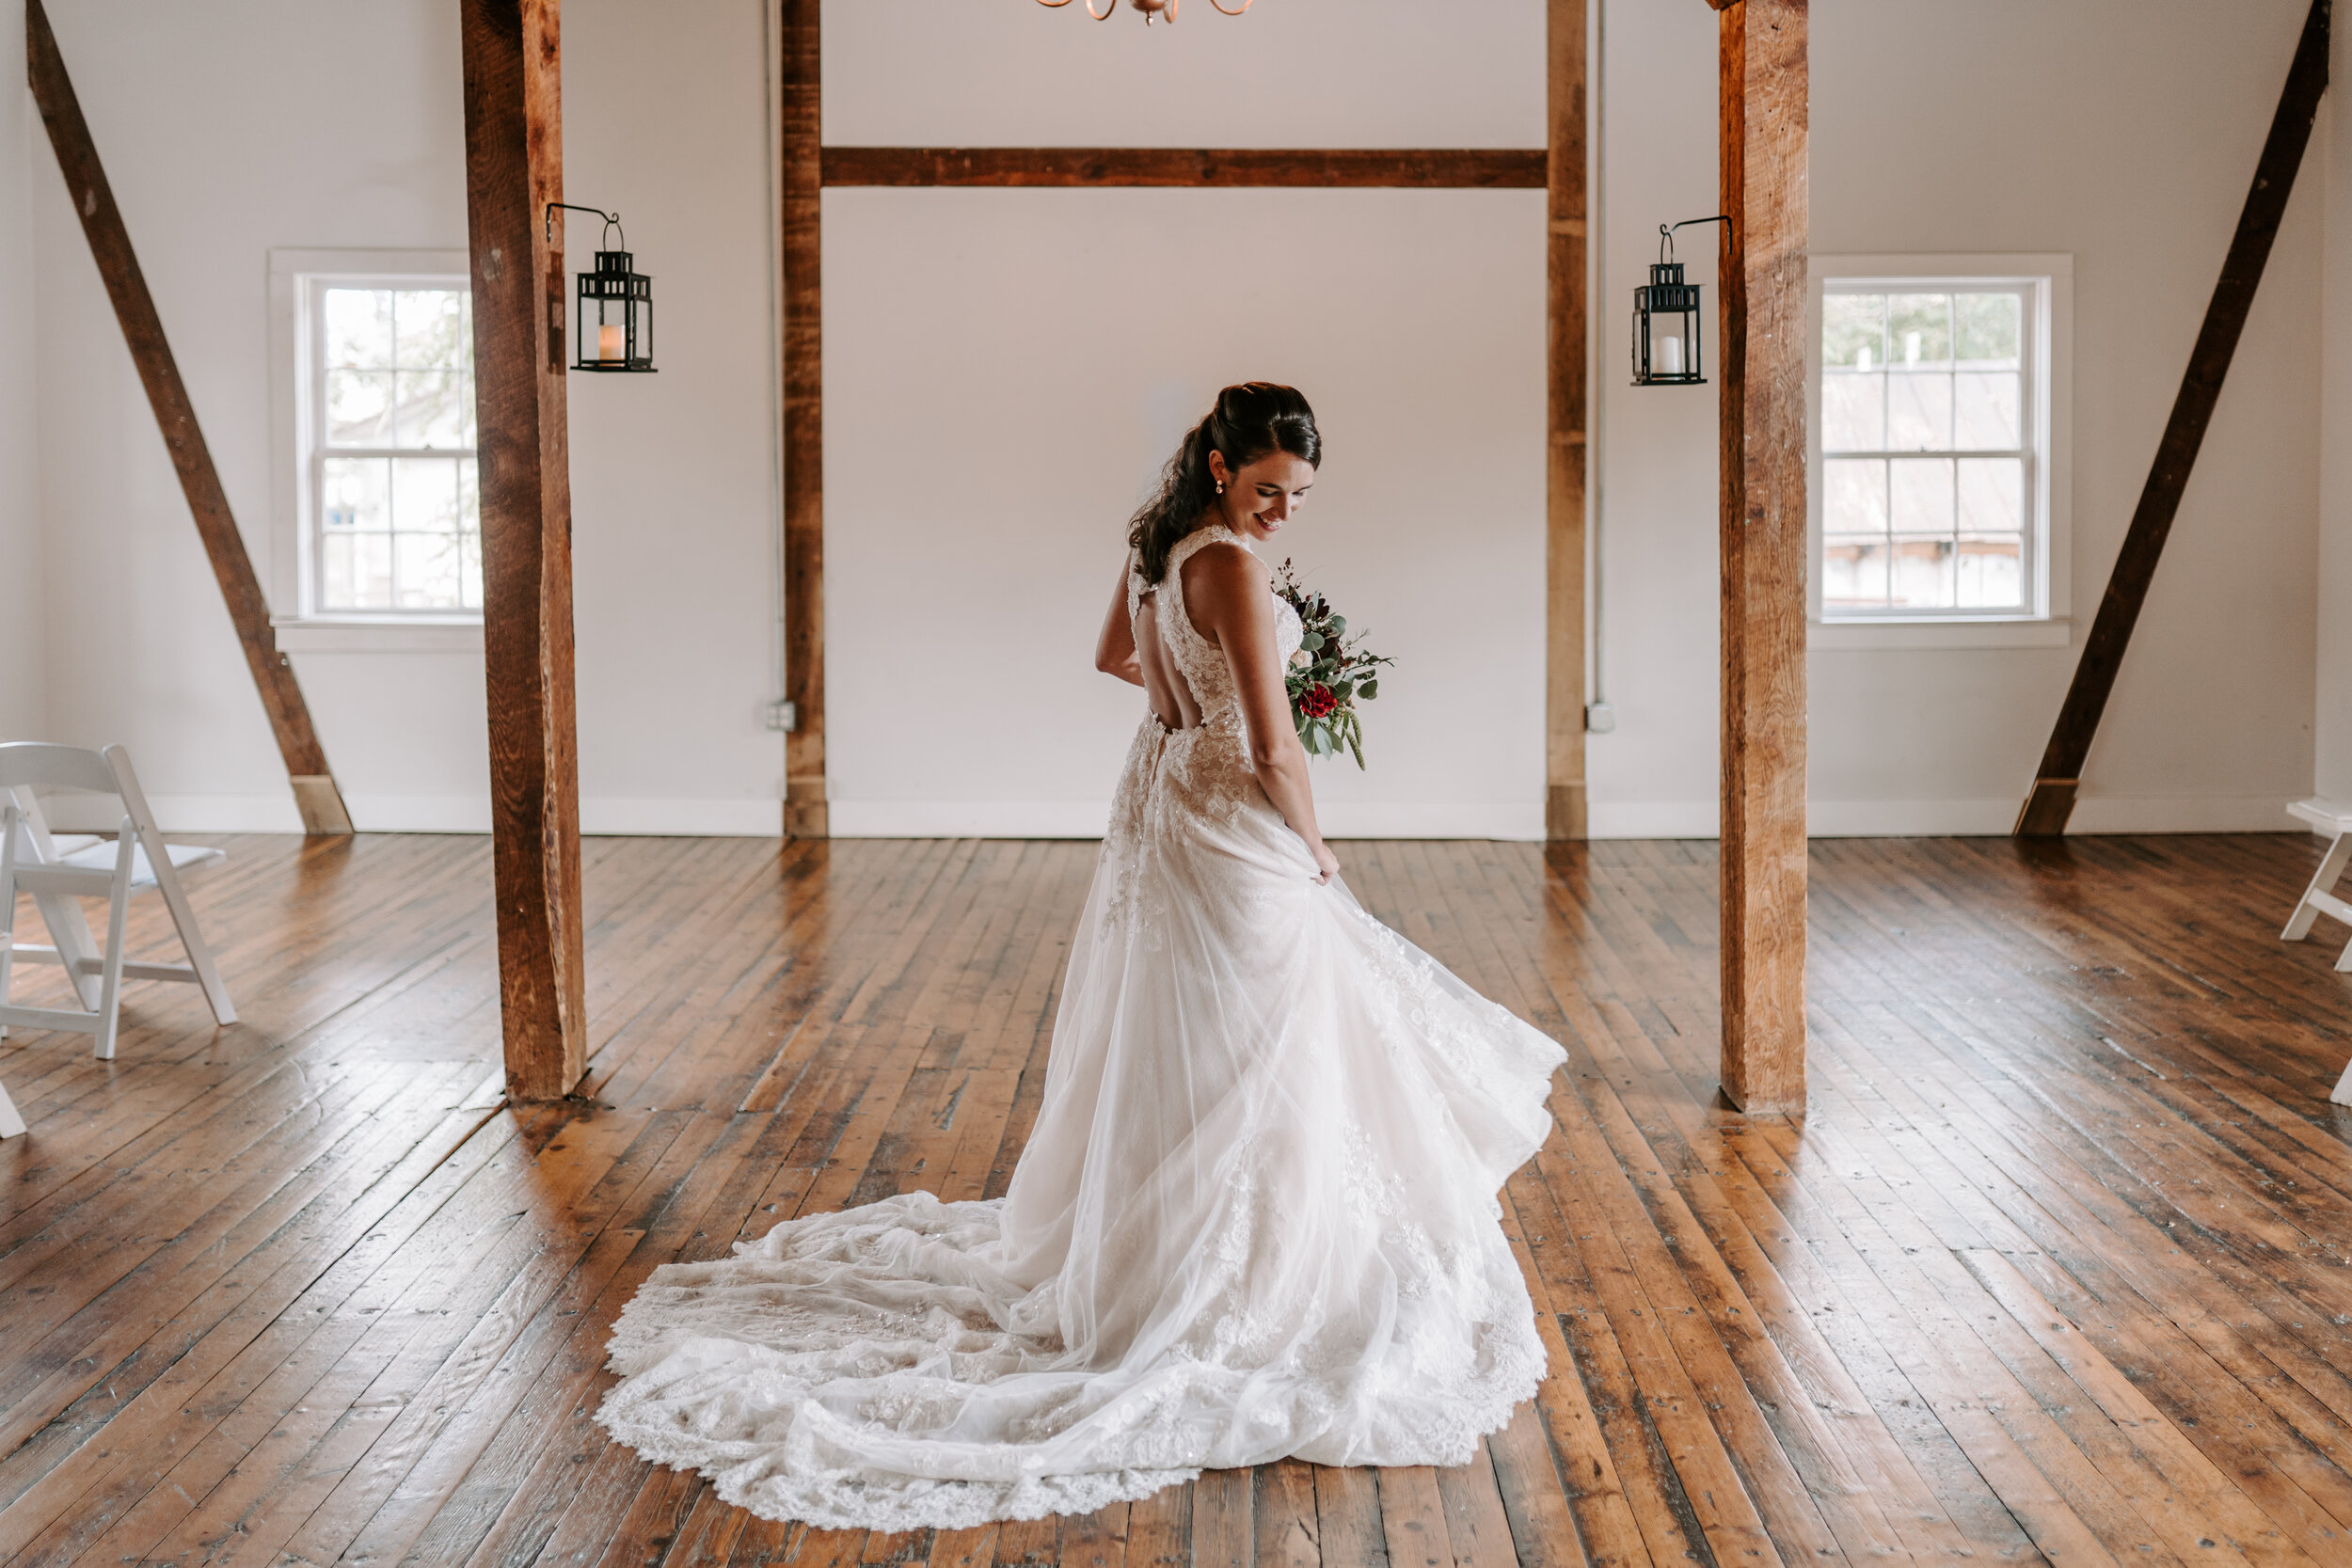 Bridal Portraits Session by Kayli LaFon Photography | Muse At The Mill wedding venue, Winston-Salem, NC